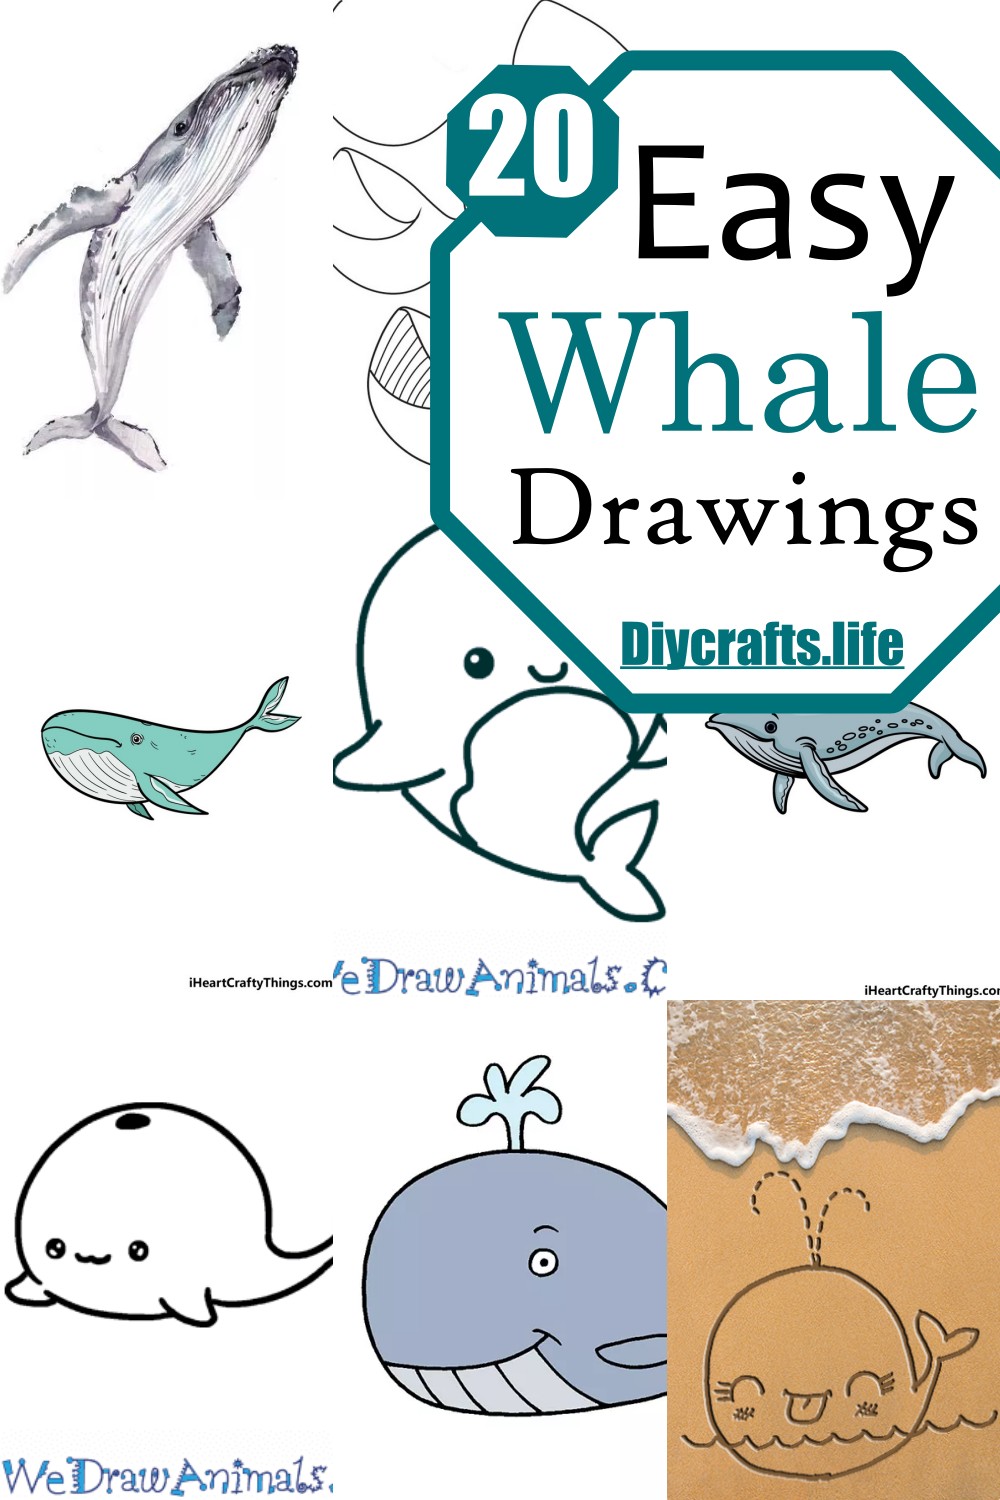 Easy Whale Drawings